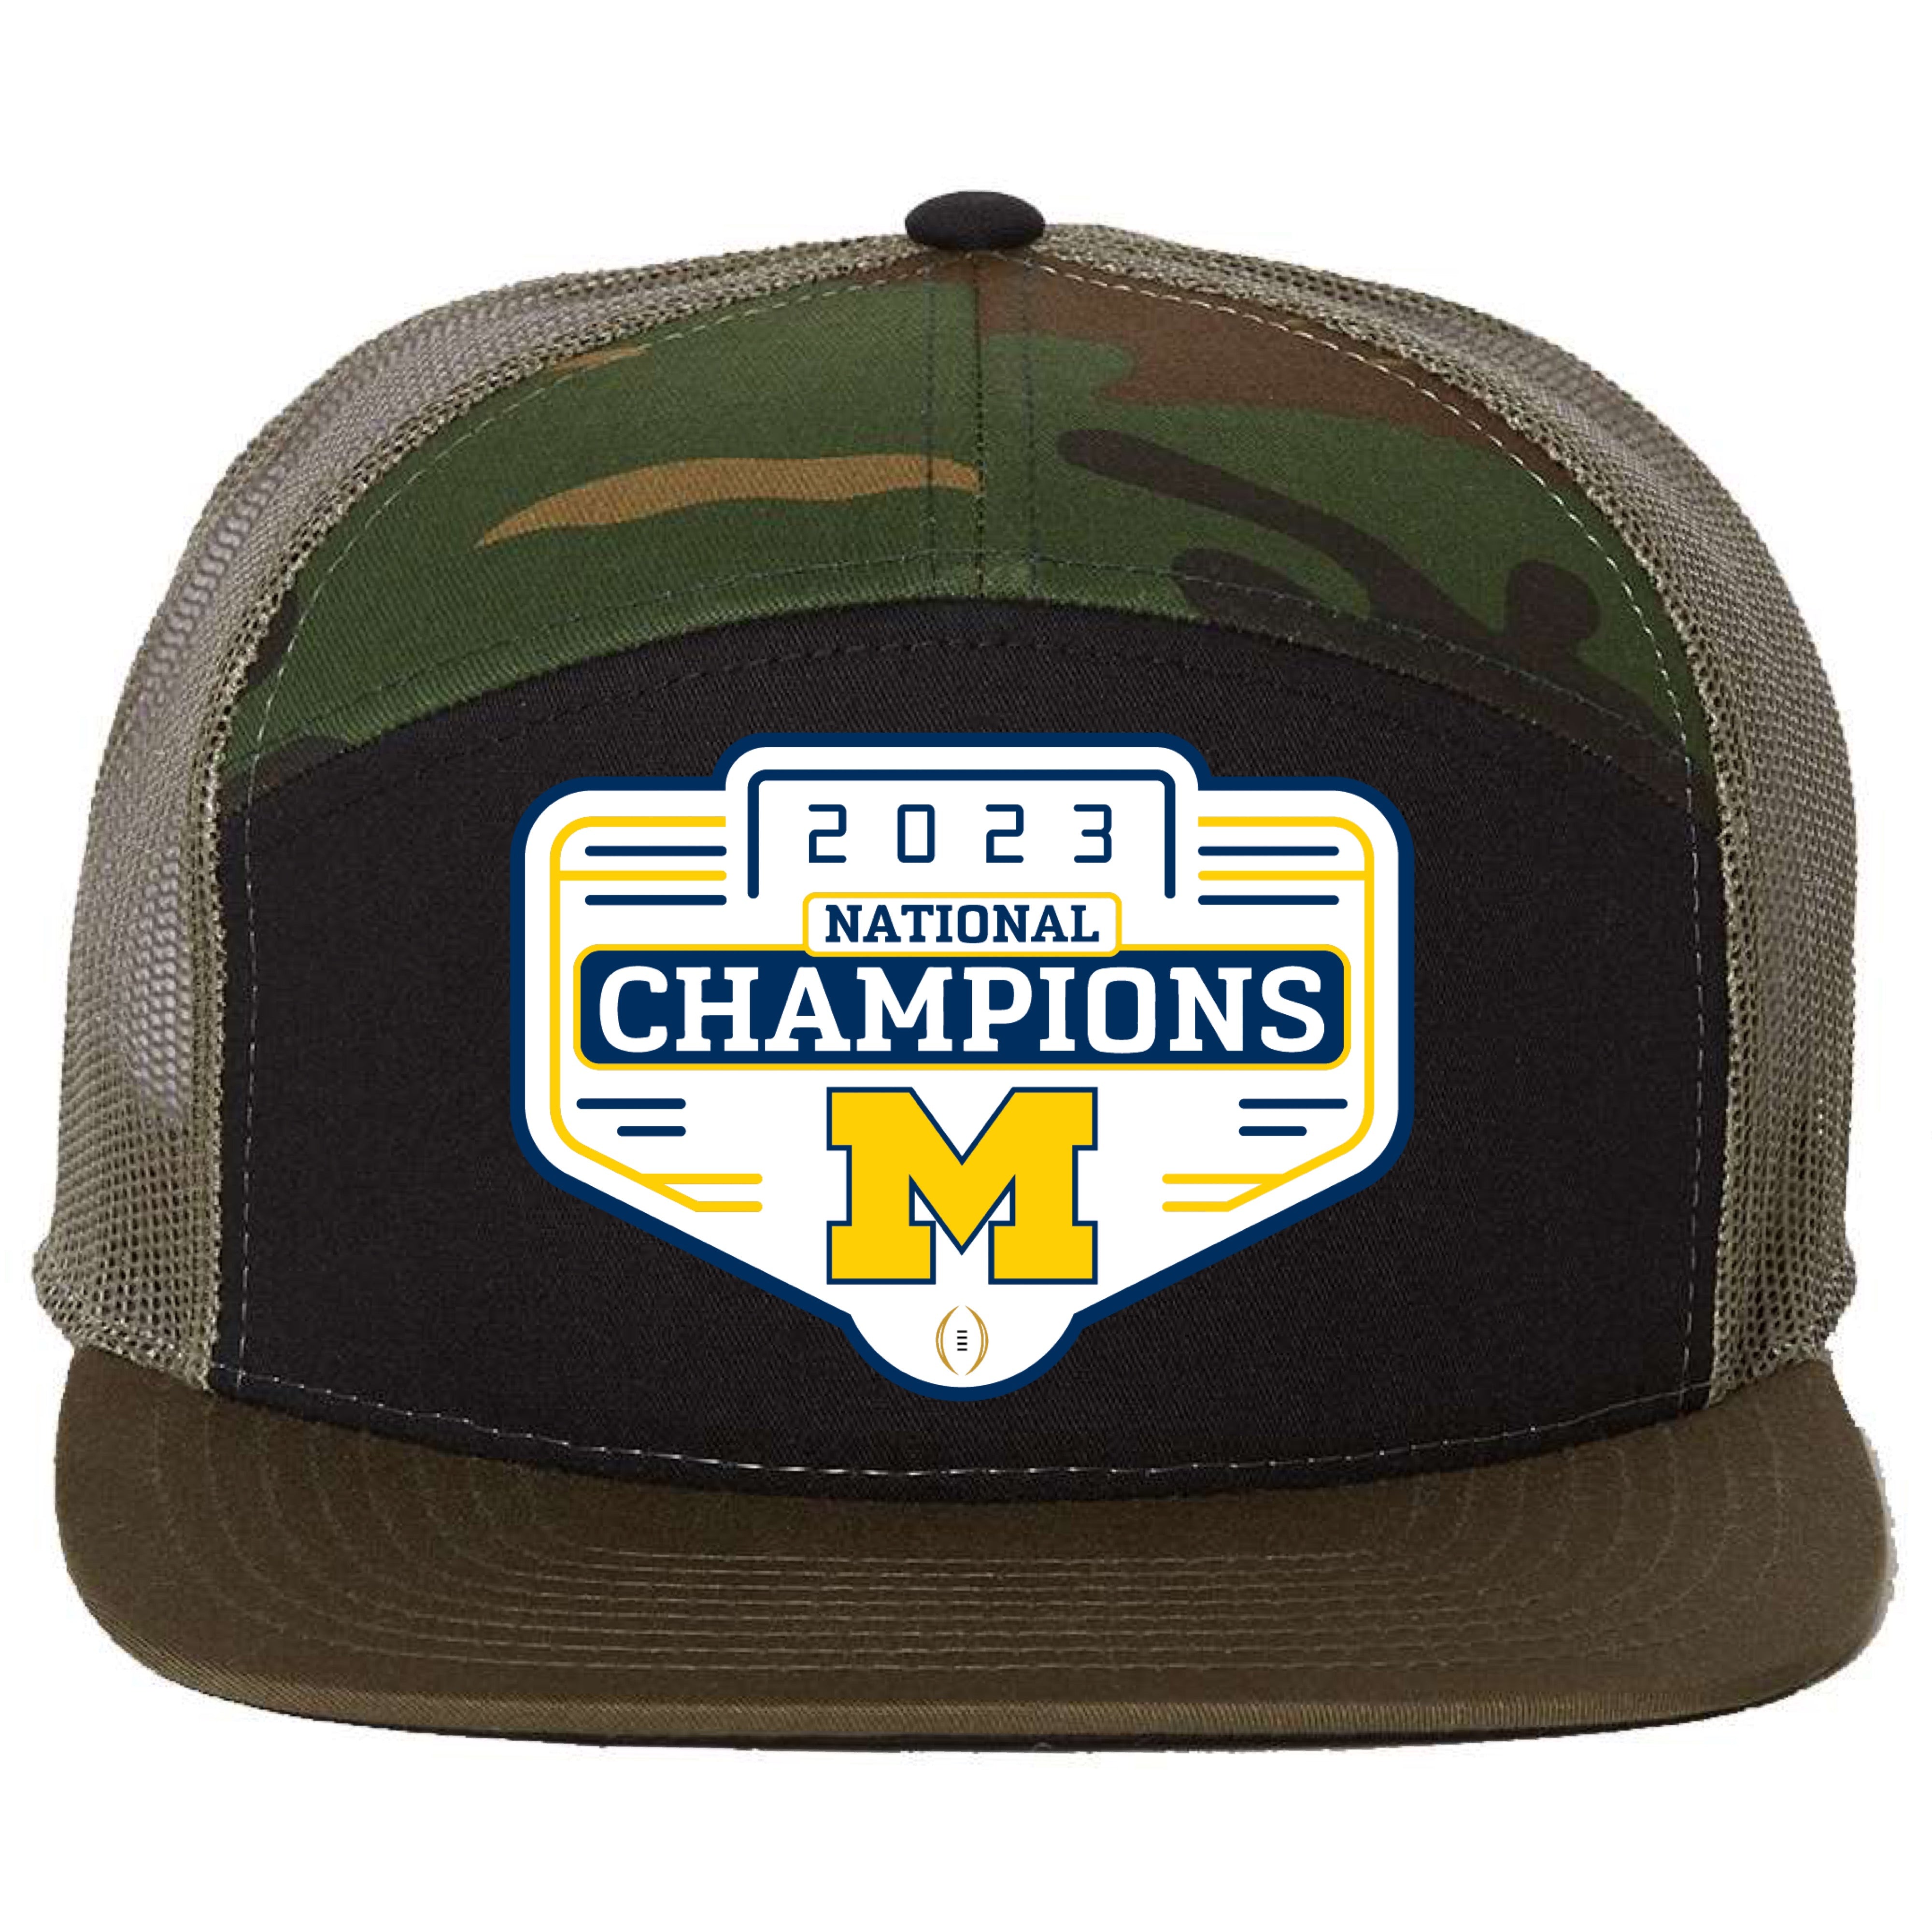 Michigan Wolverines 2023 National Champions 3D Snapback Seven-Panel Trucker Hat- Black/ Camo/ Loden